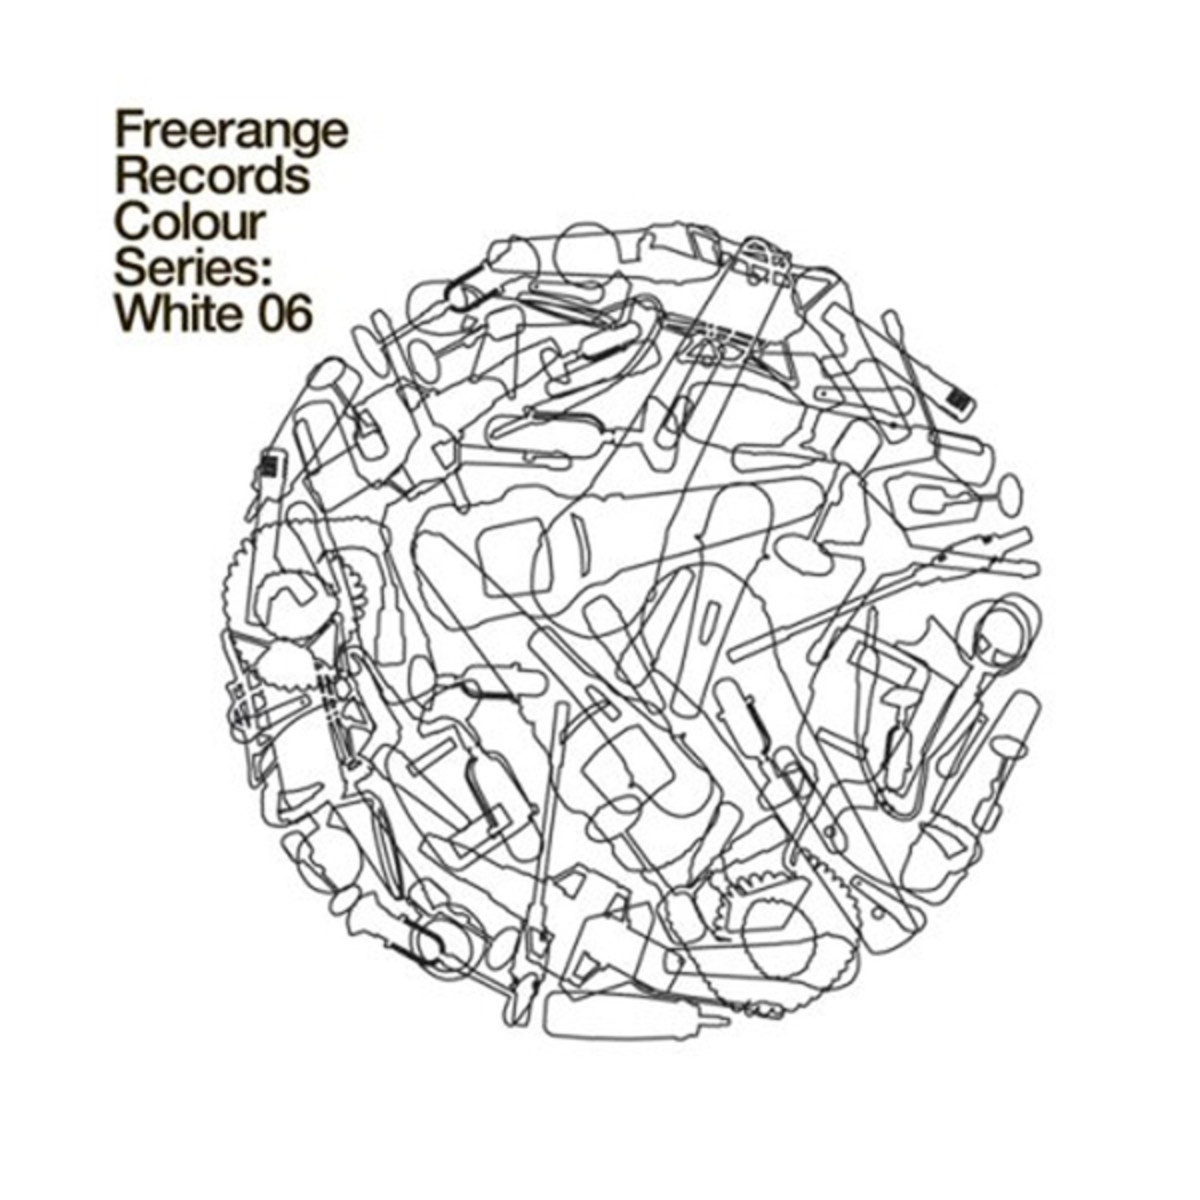 Freerange Records Presents Colour Series: White 06